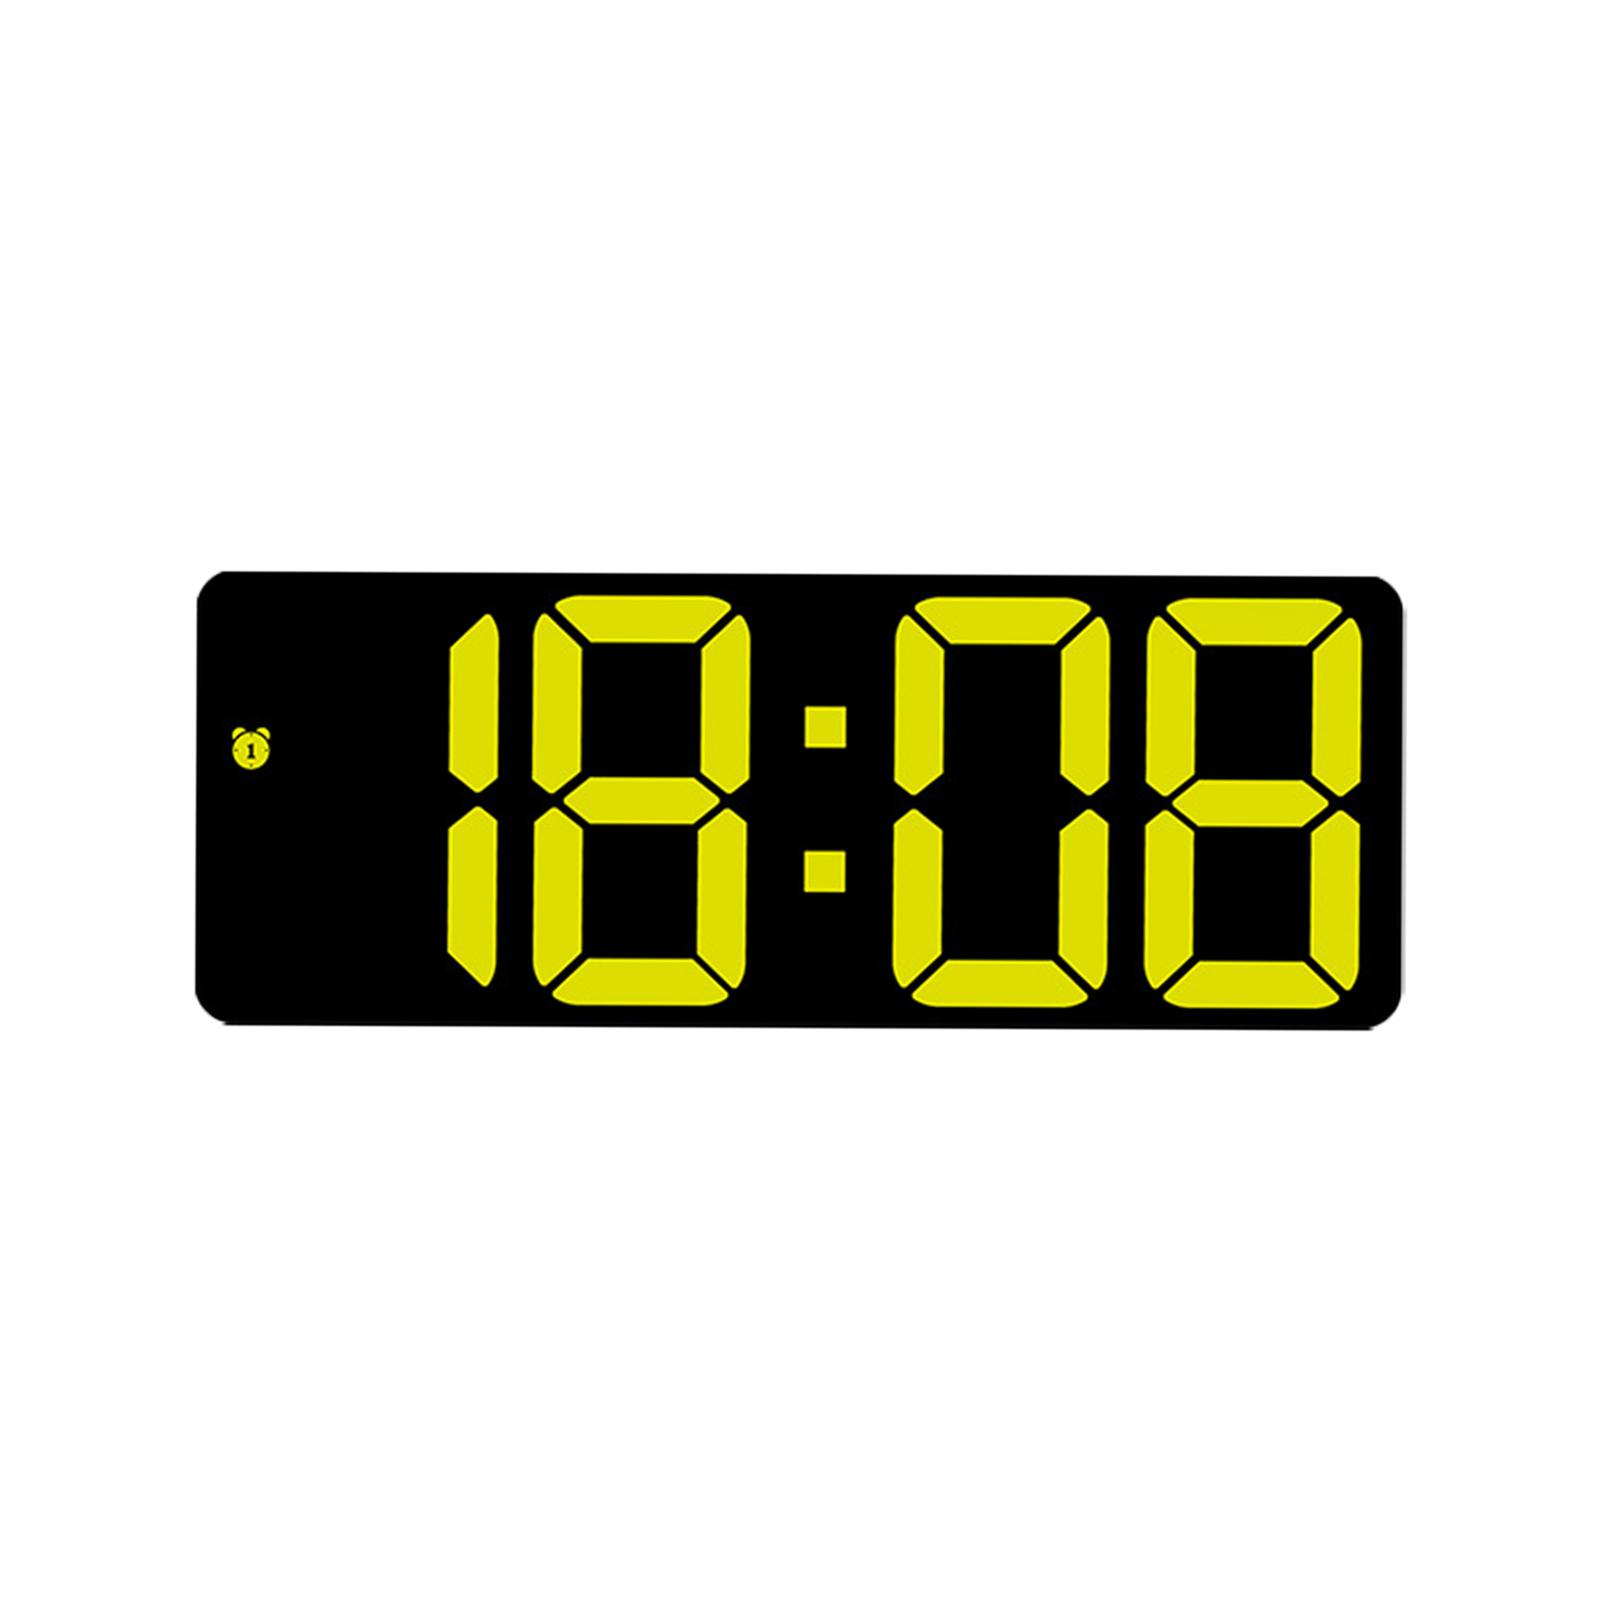 Digital Wall Clock Desk LED Desktop Alarm Clock for Living Room Adult Office Yellow